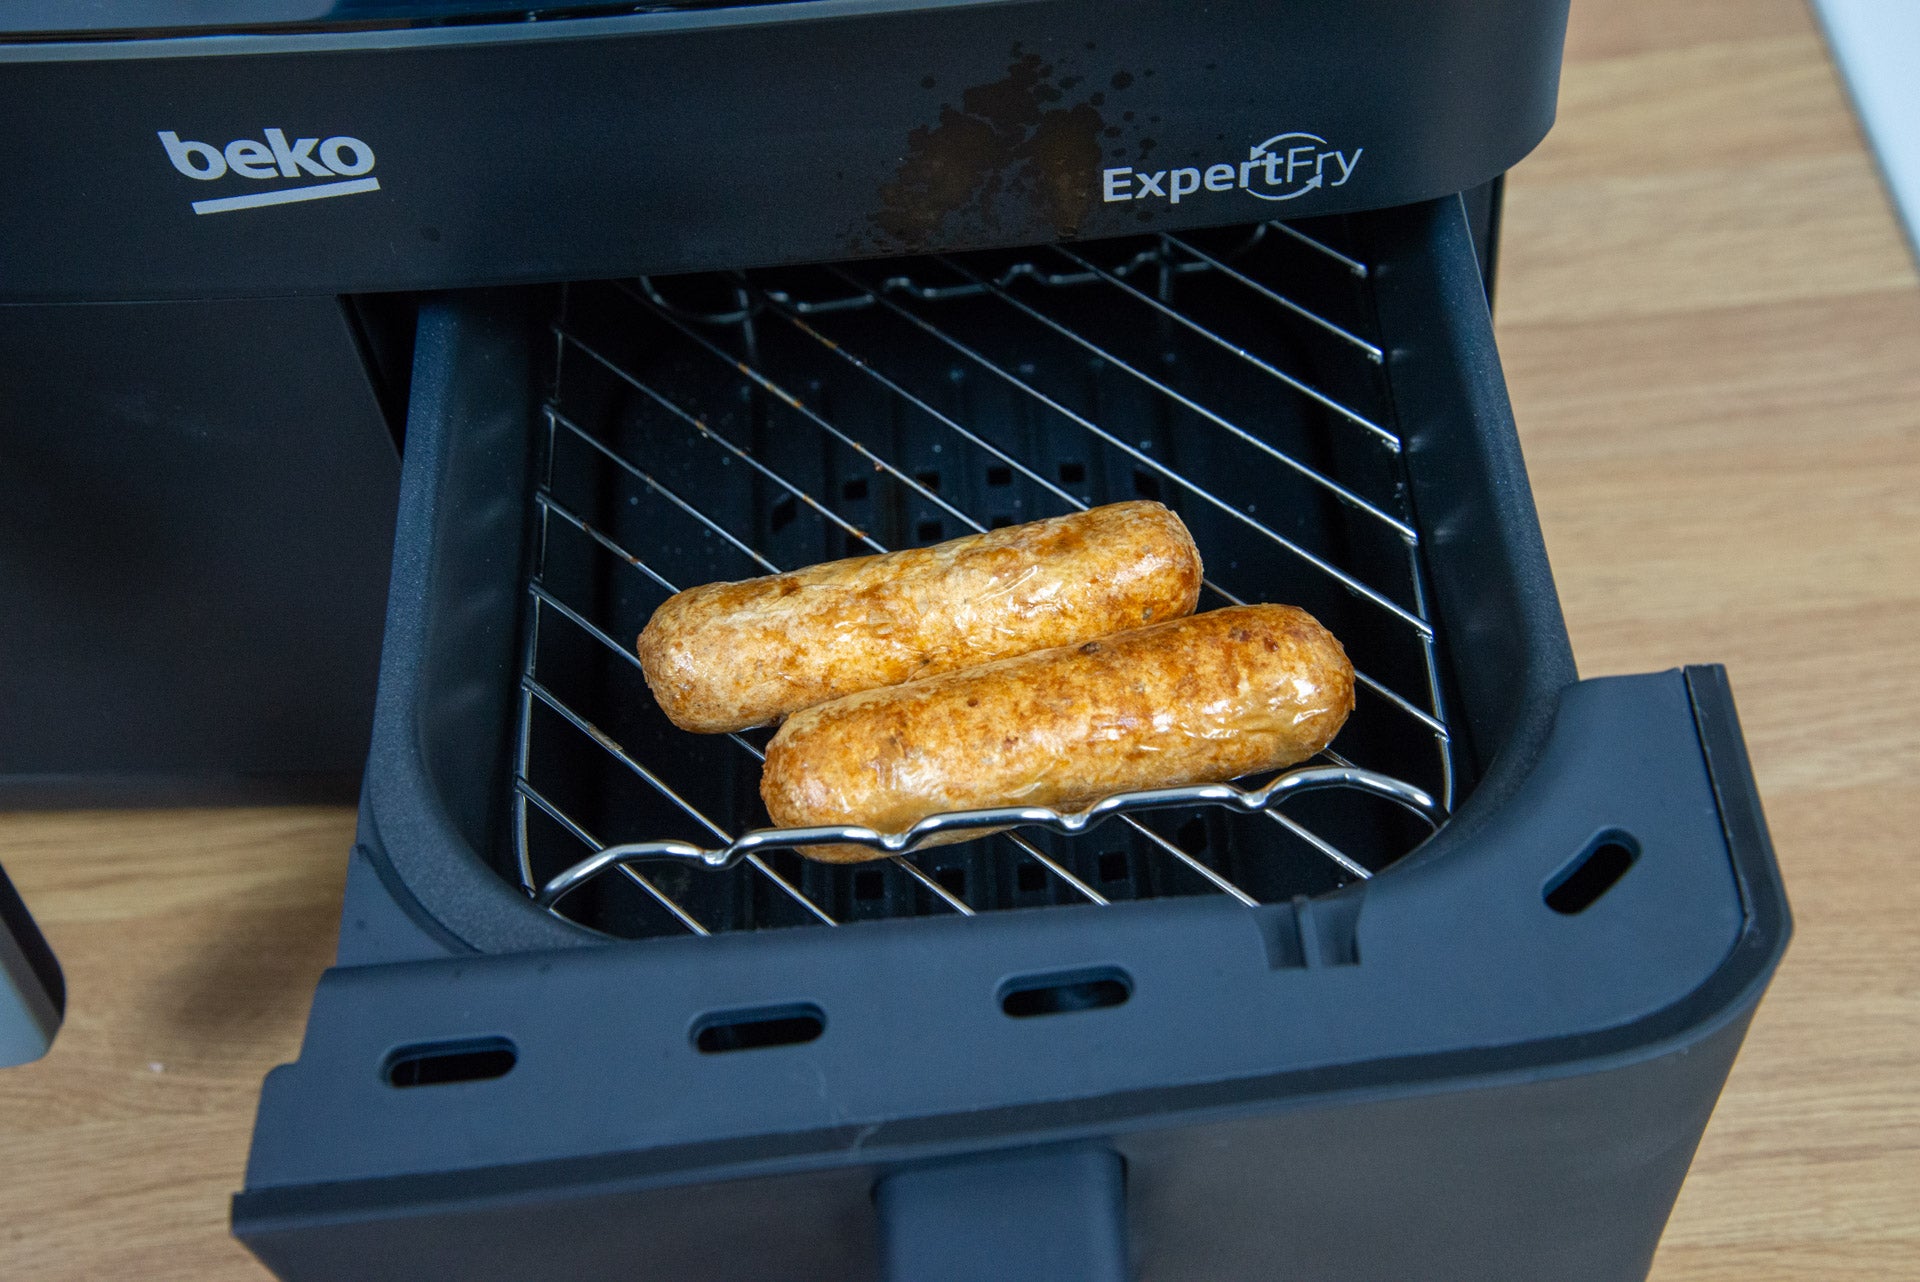 Beko ExpertFry Dual Zone Air Fryer sausages